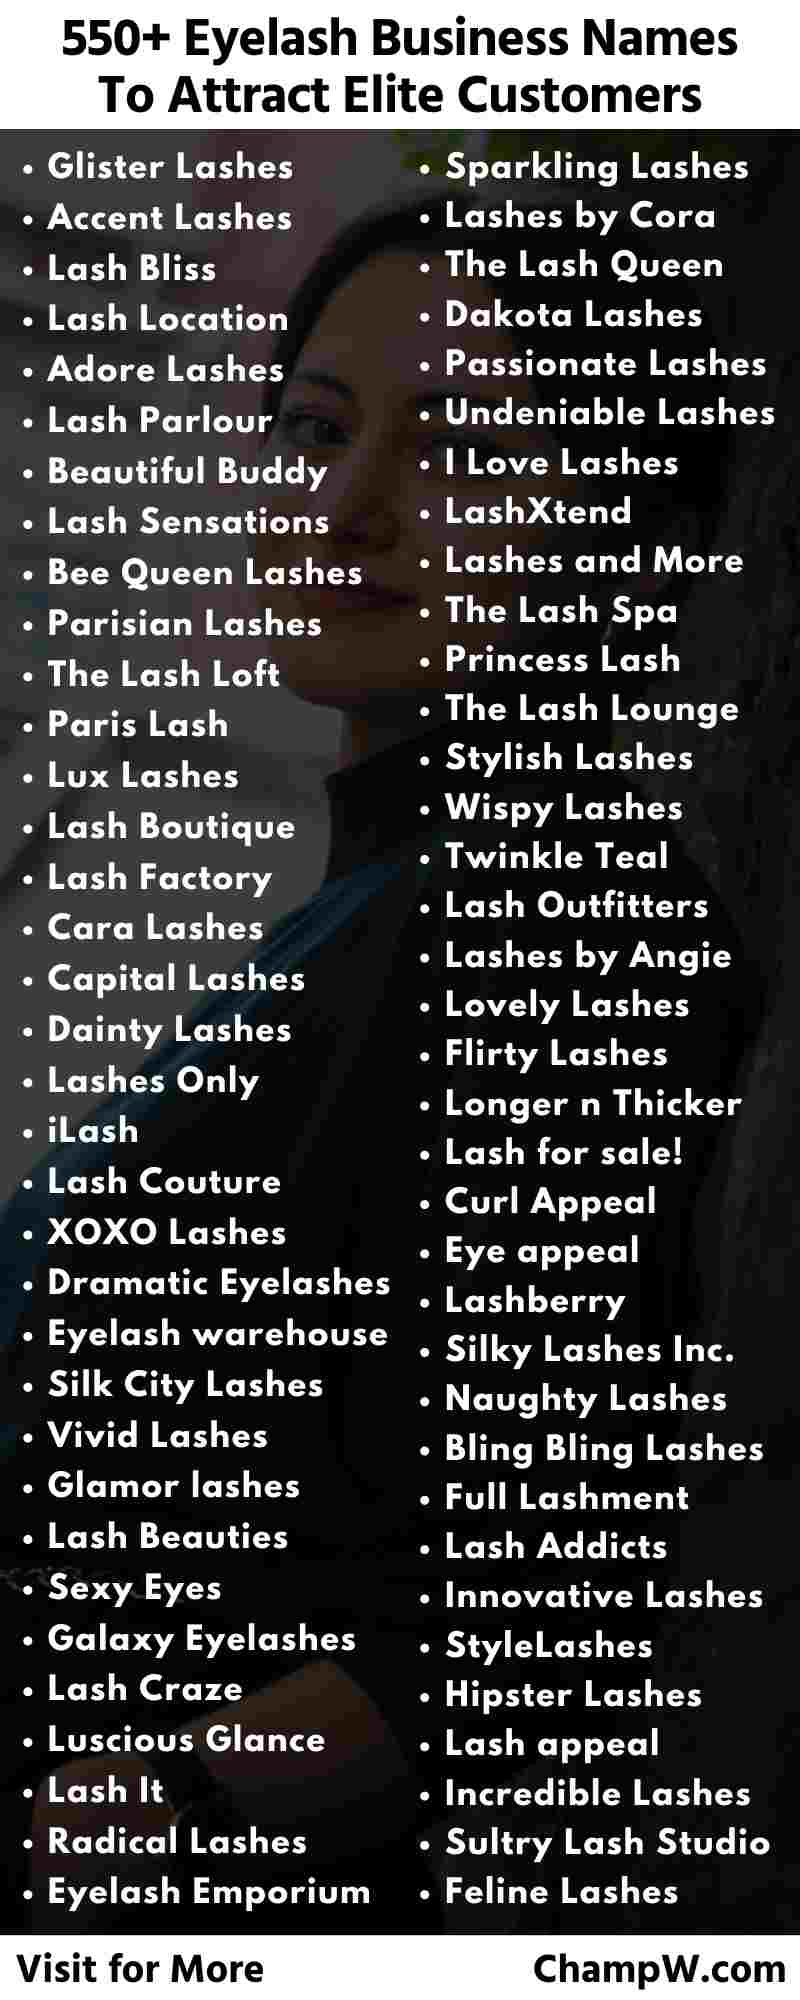 Eyelash Business Names infographic